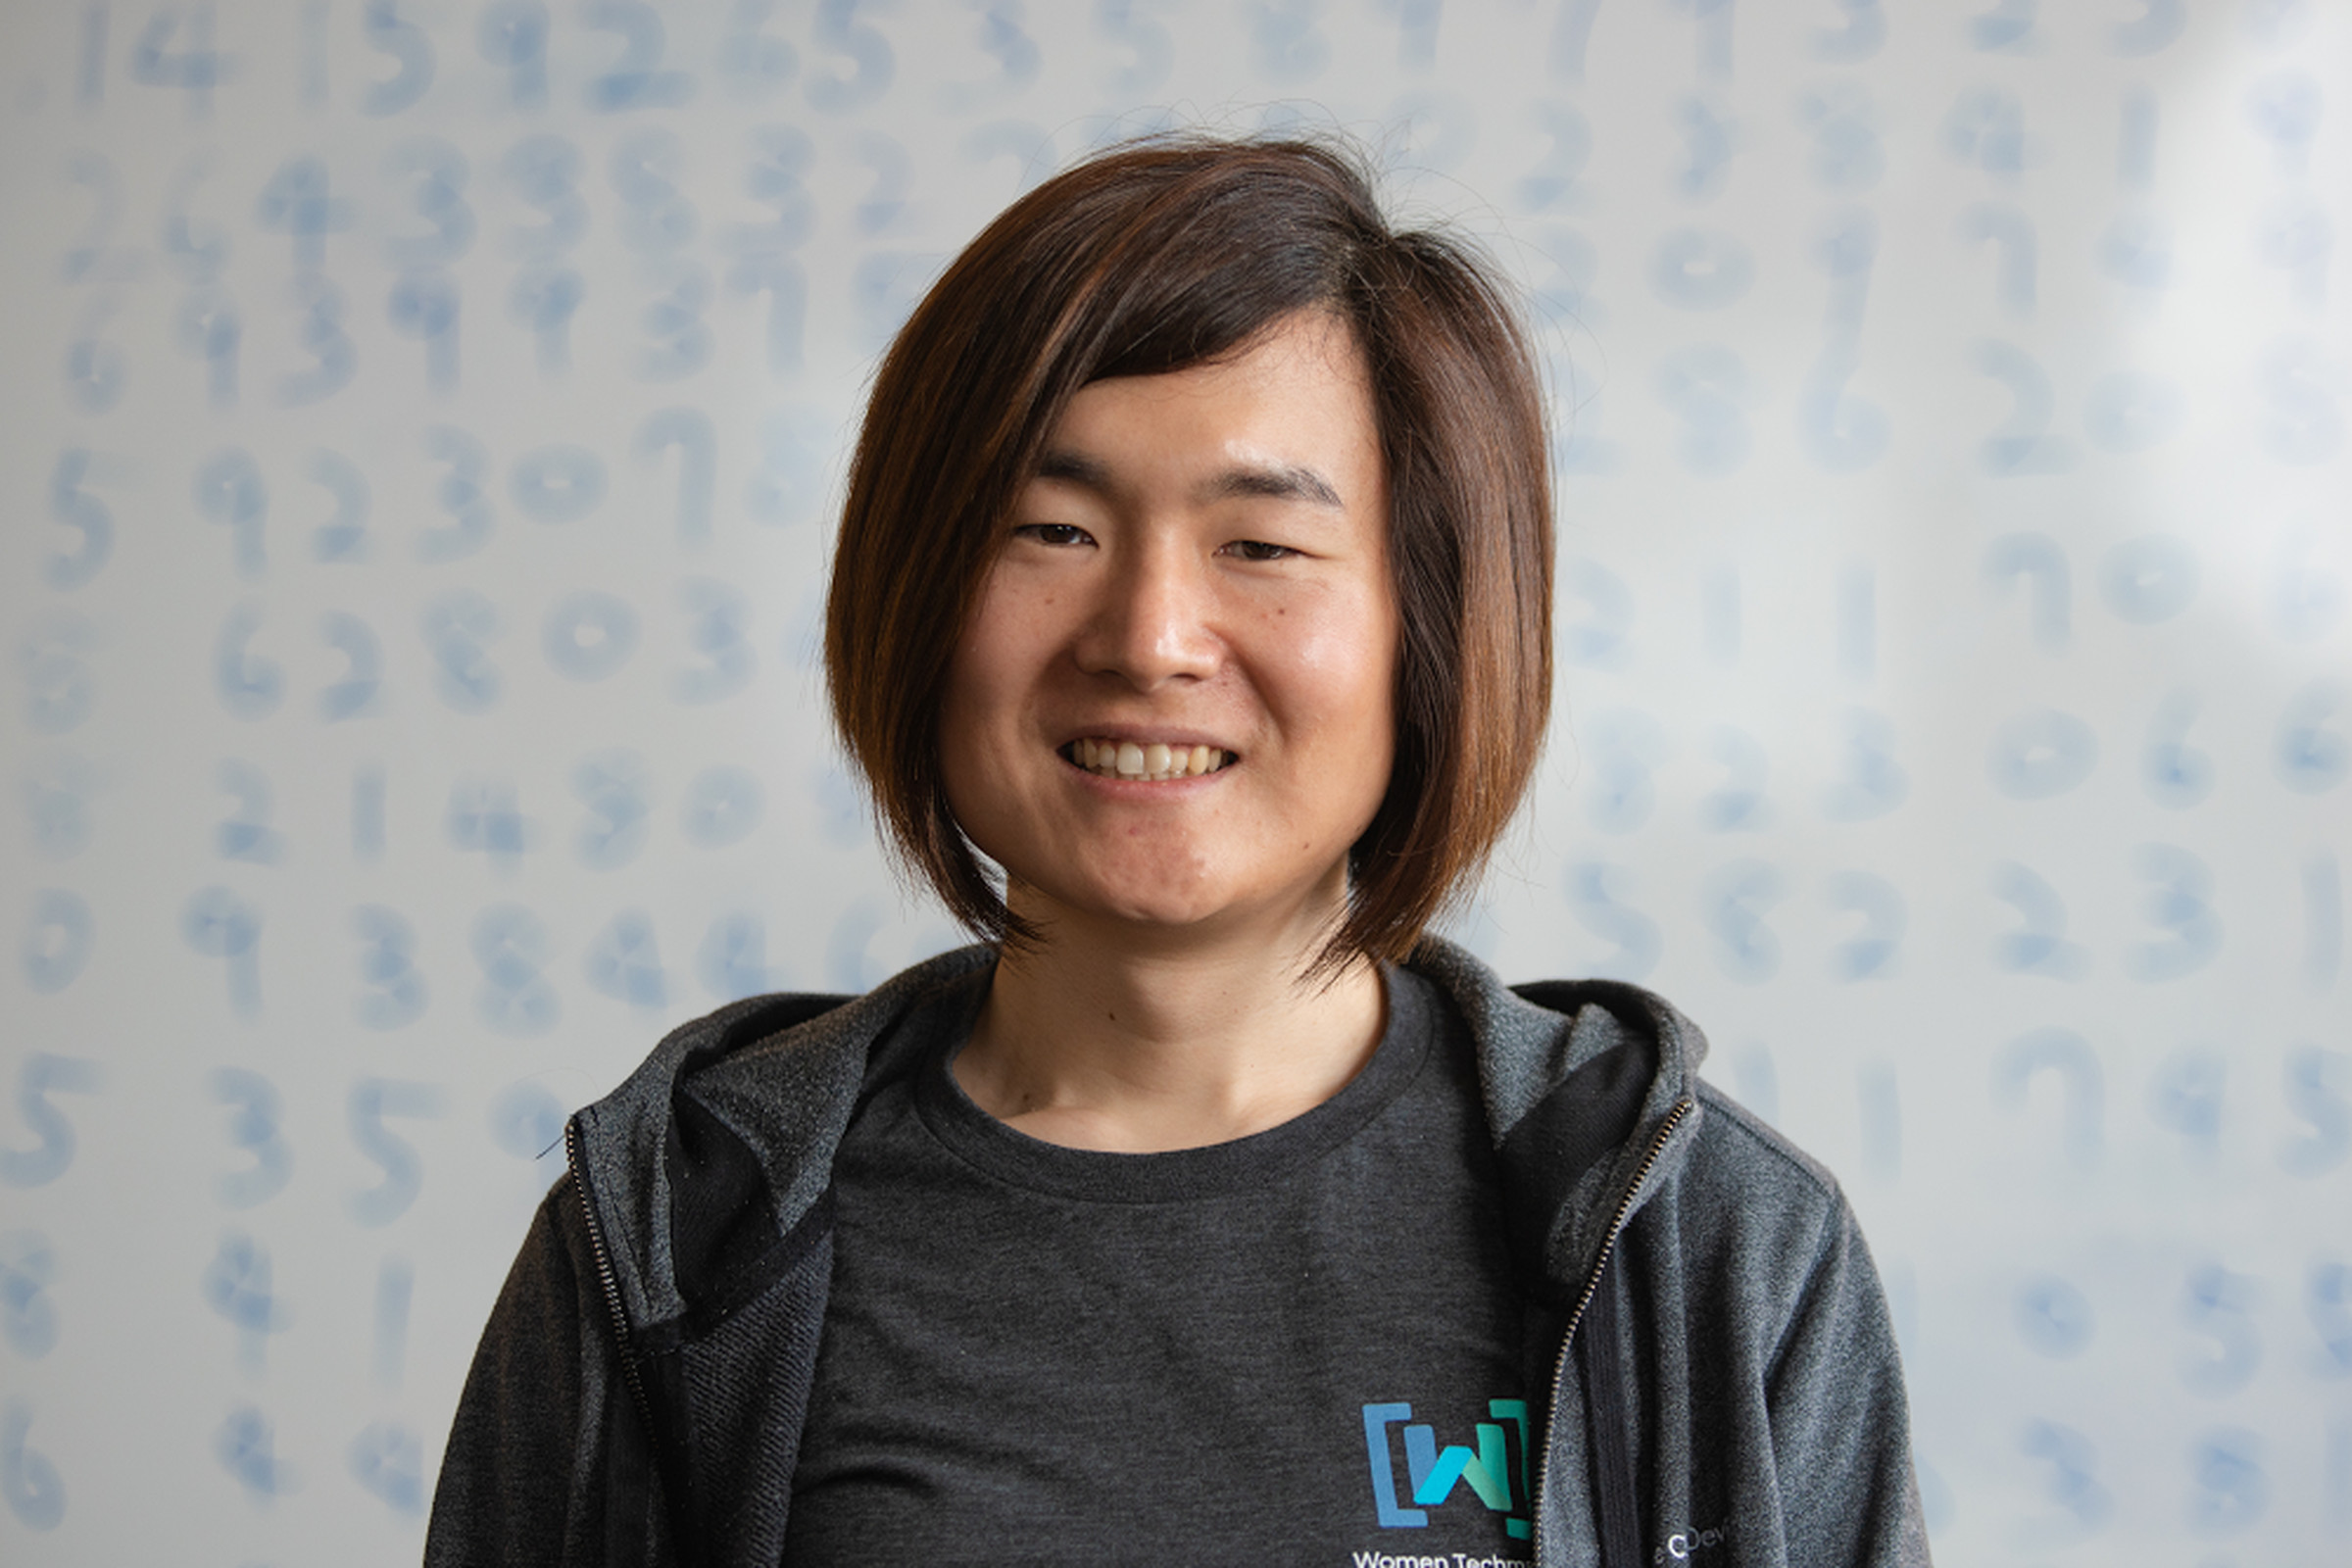 Emma Haruka Iwao, the Google employee behind the calculation.